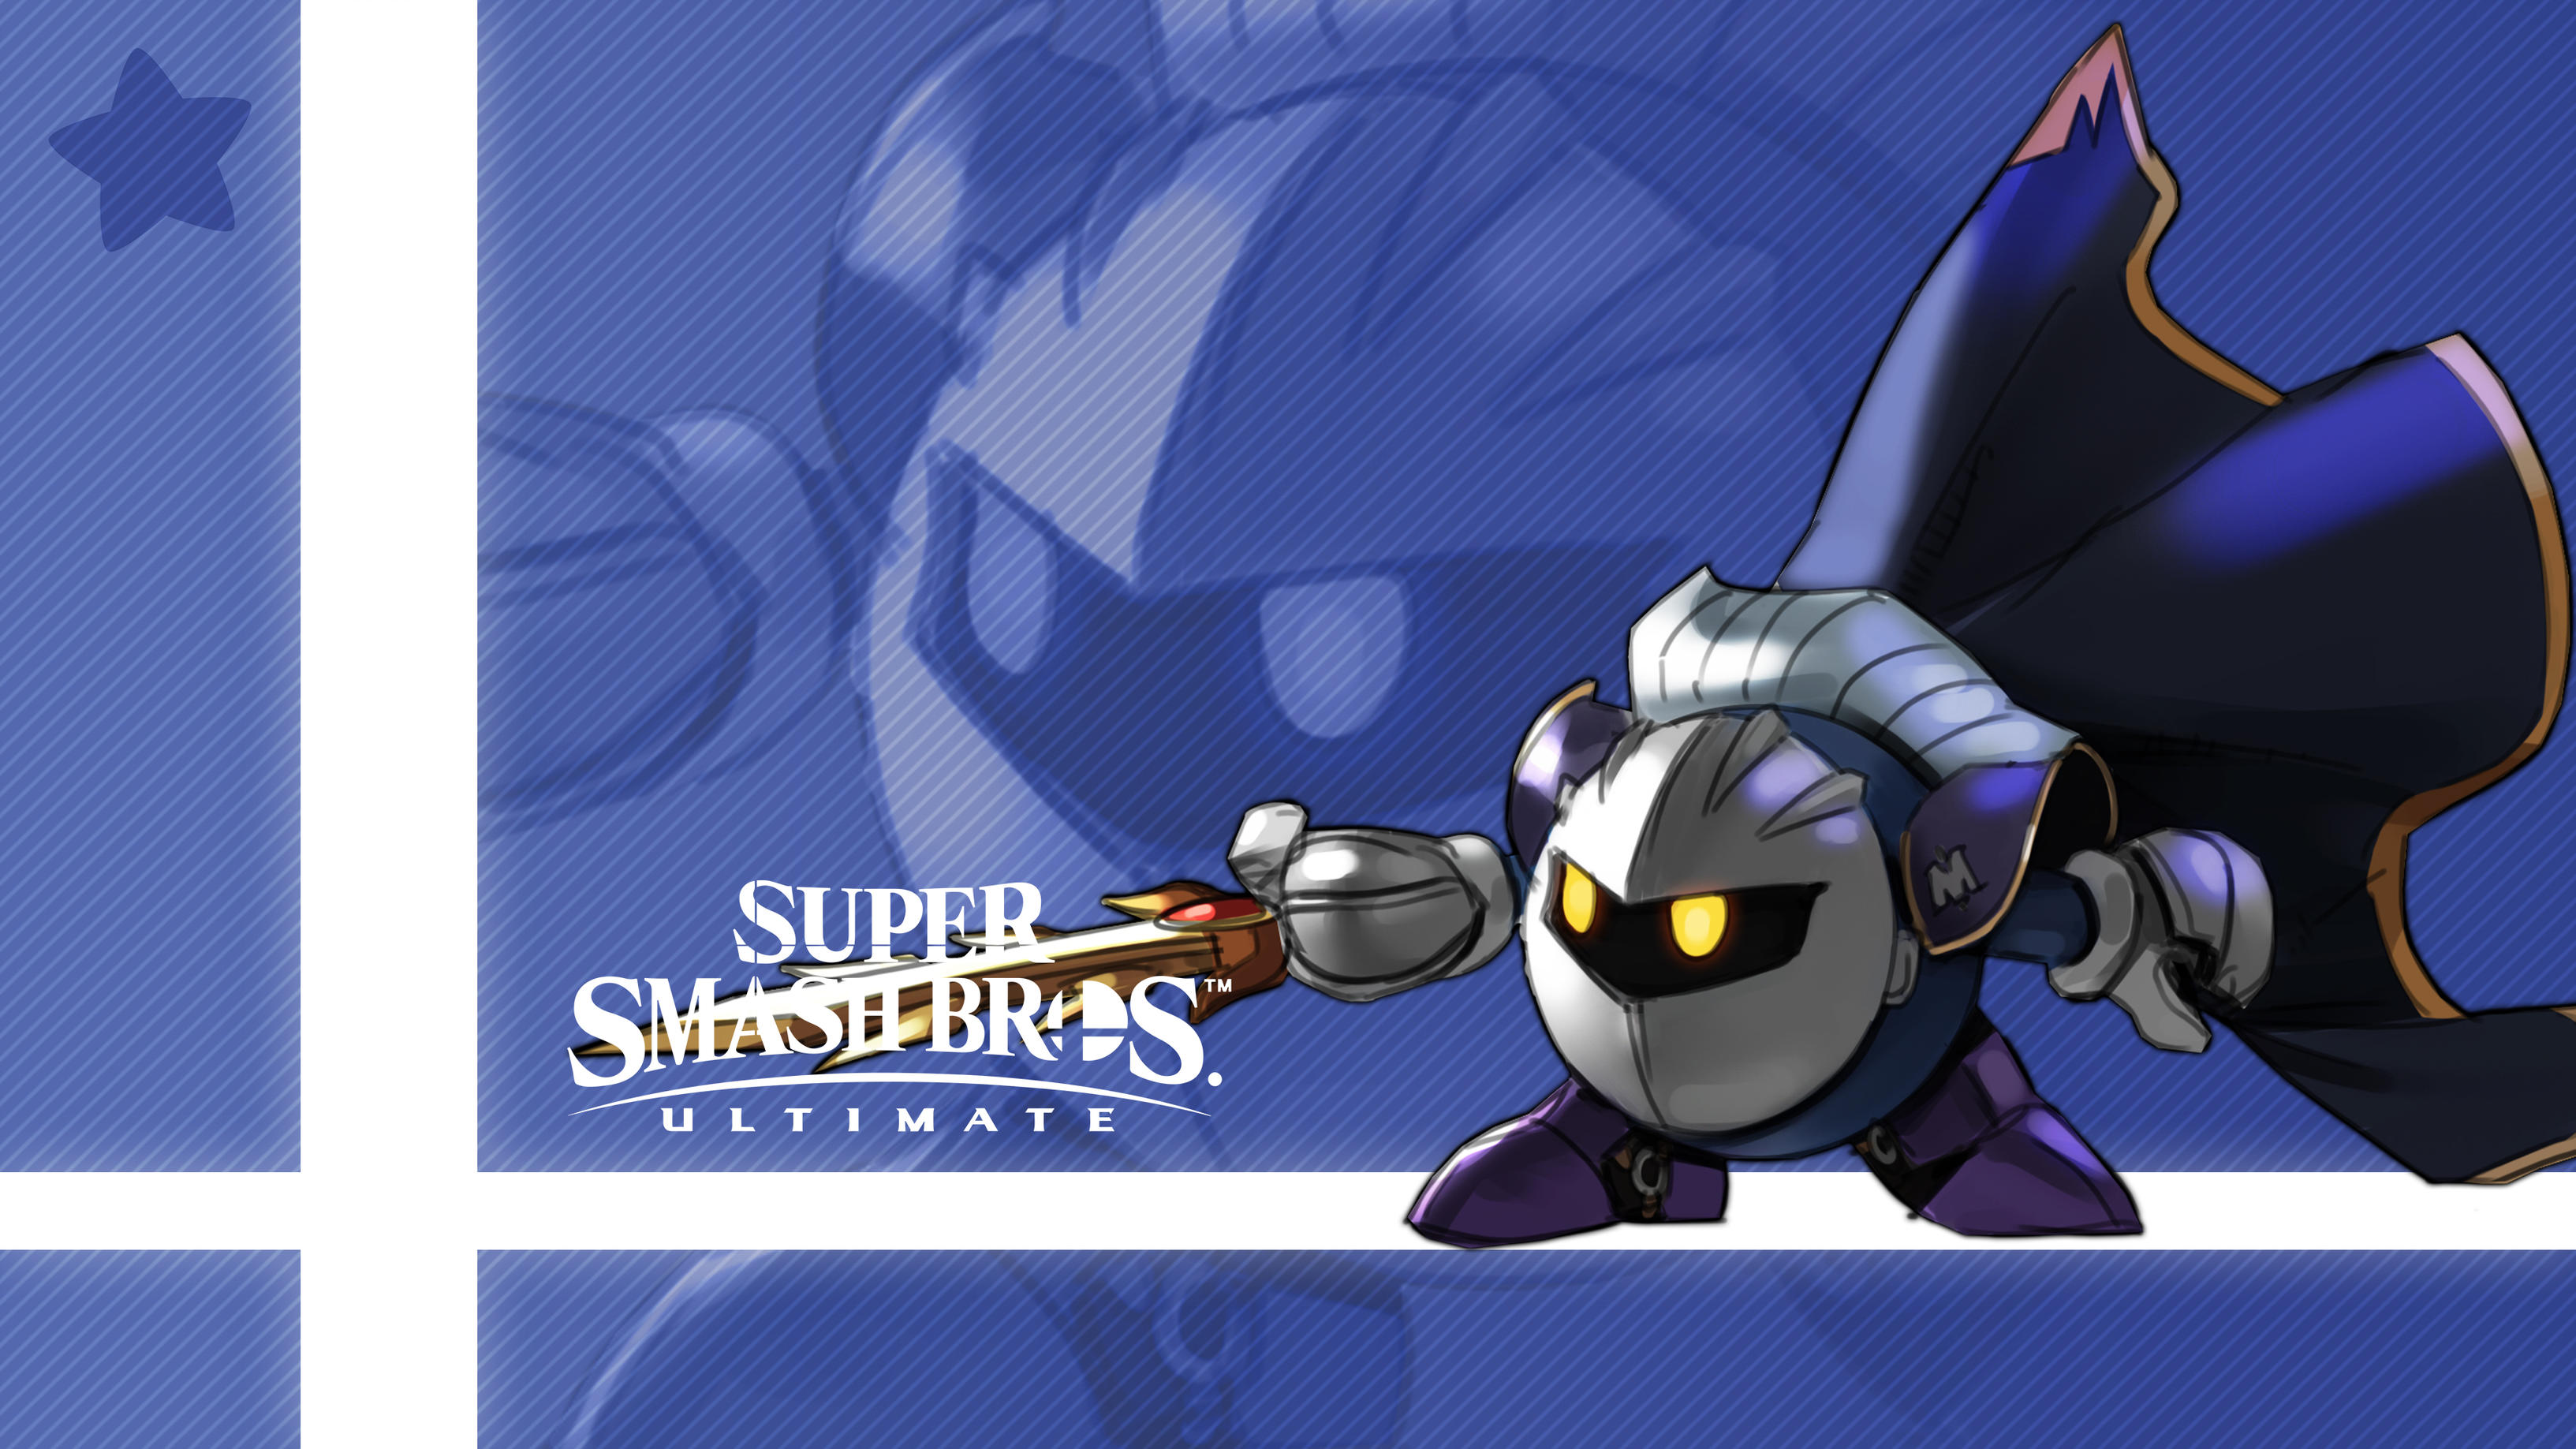 Meta Knight Super Smash Bros Ultimate 3266x1837